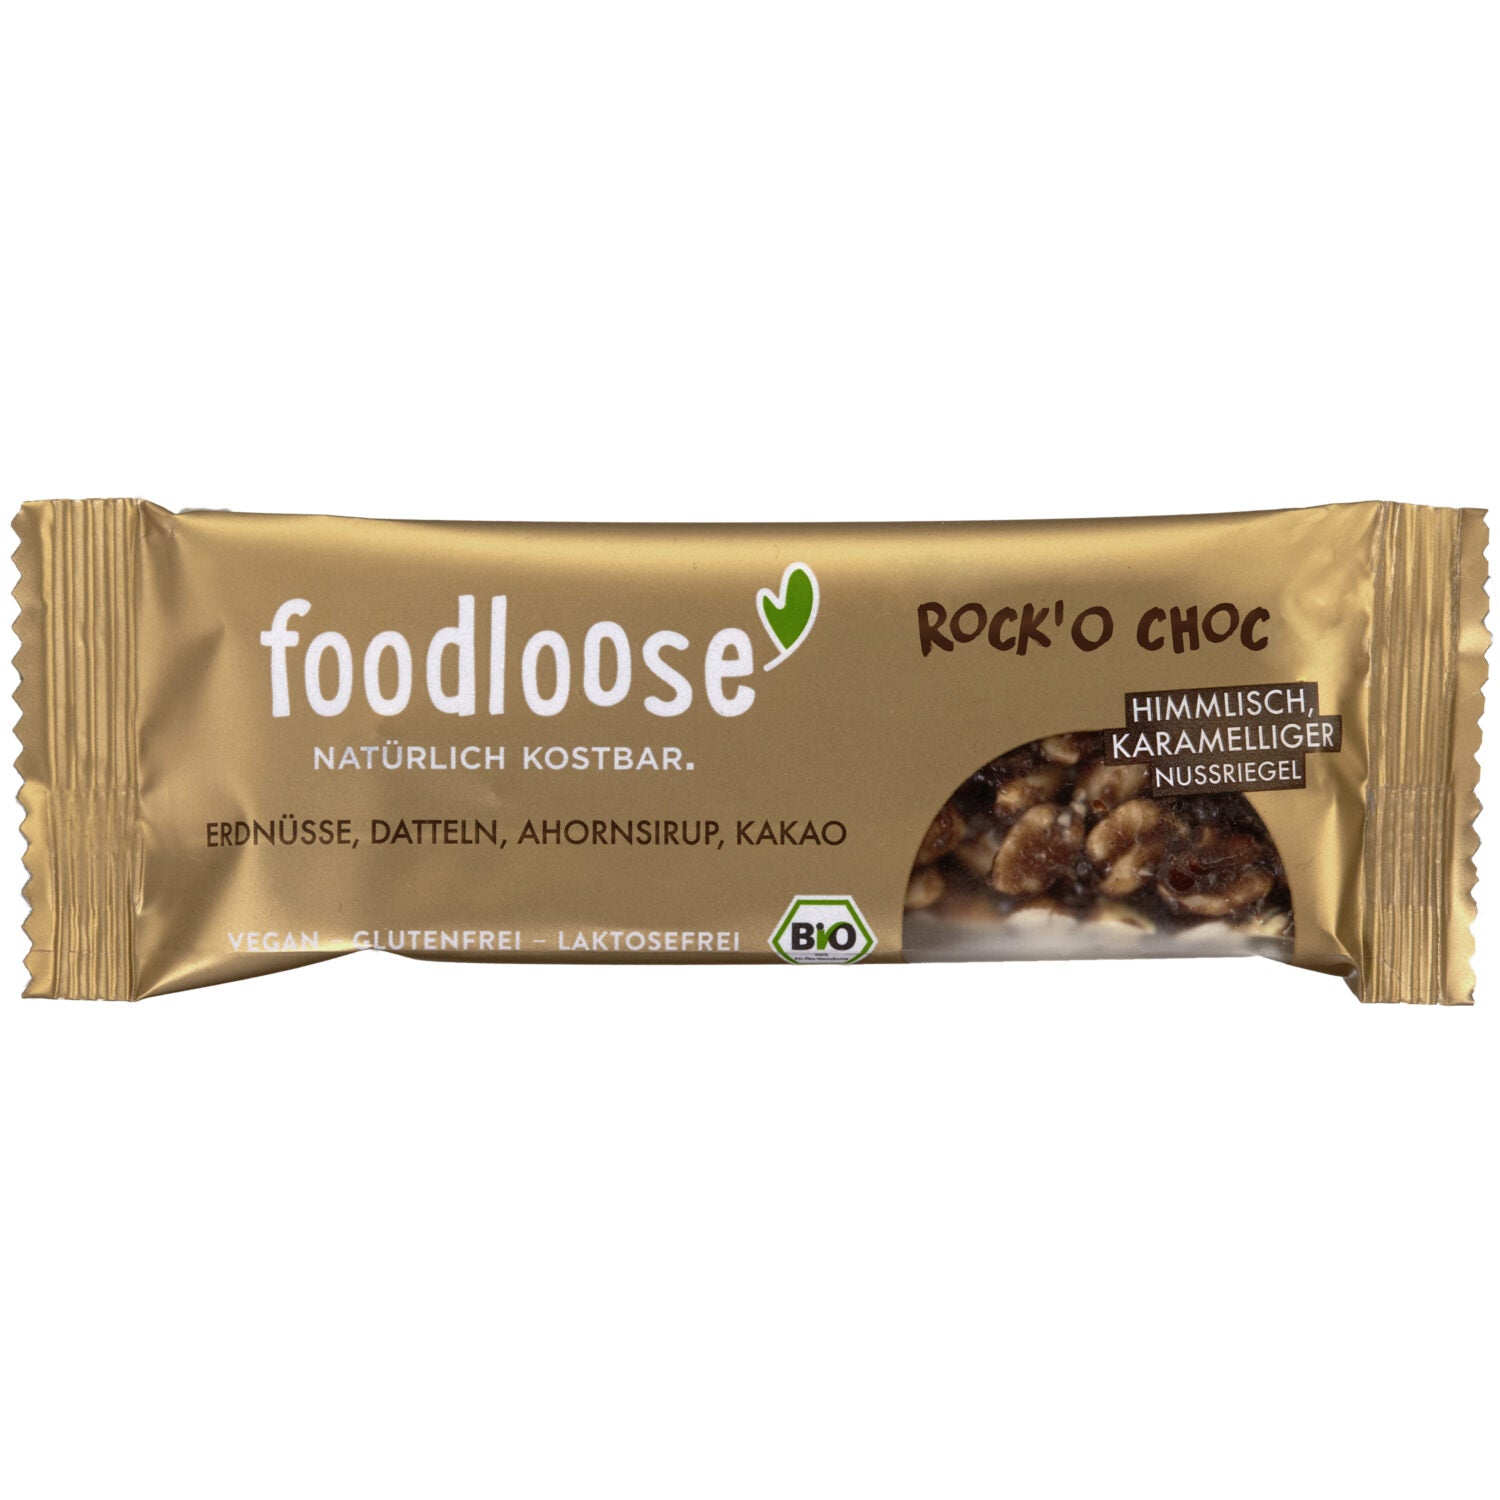 foodloose- Nussriegel-Rocko Choc